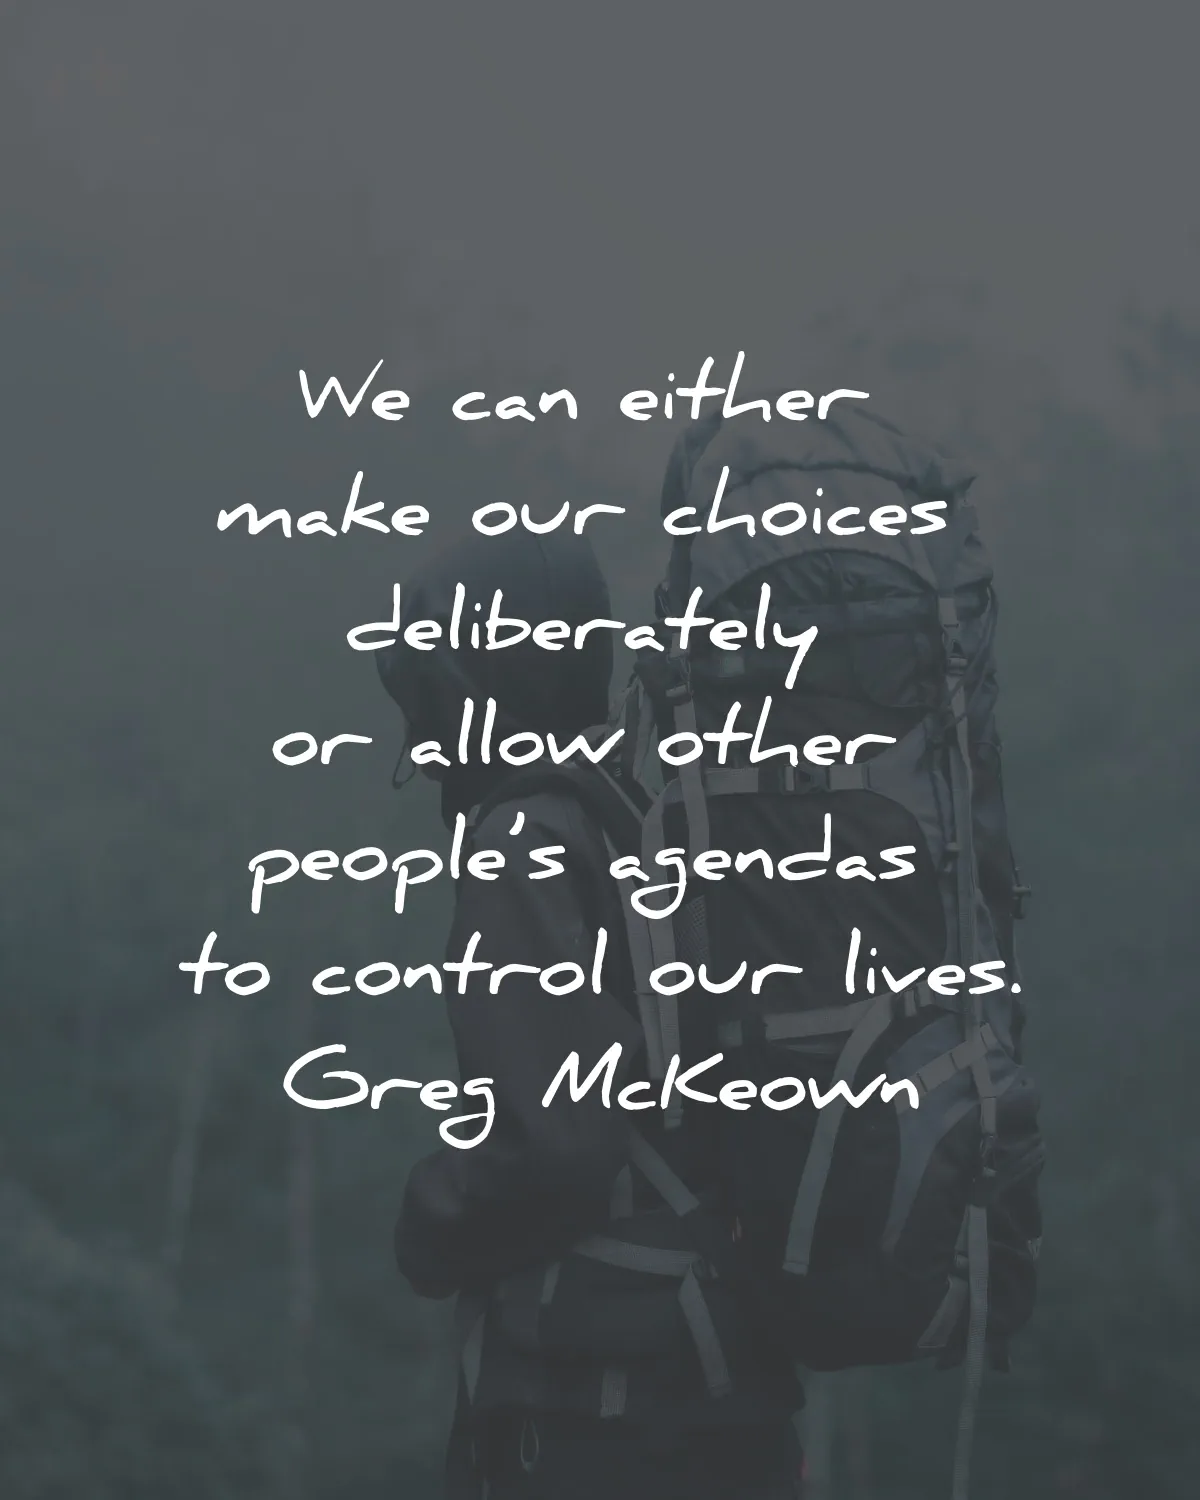 essentialism quotes greg mckeown either make choices deliberately agenda wisdom